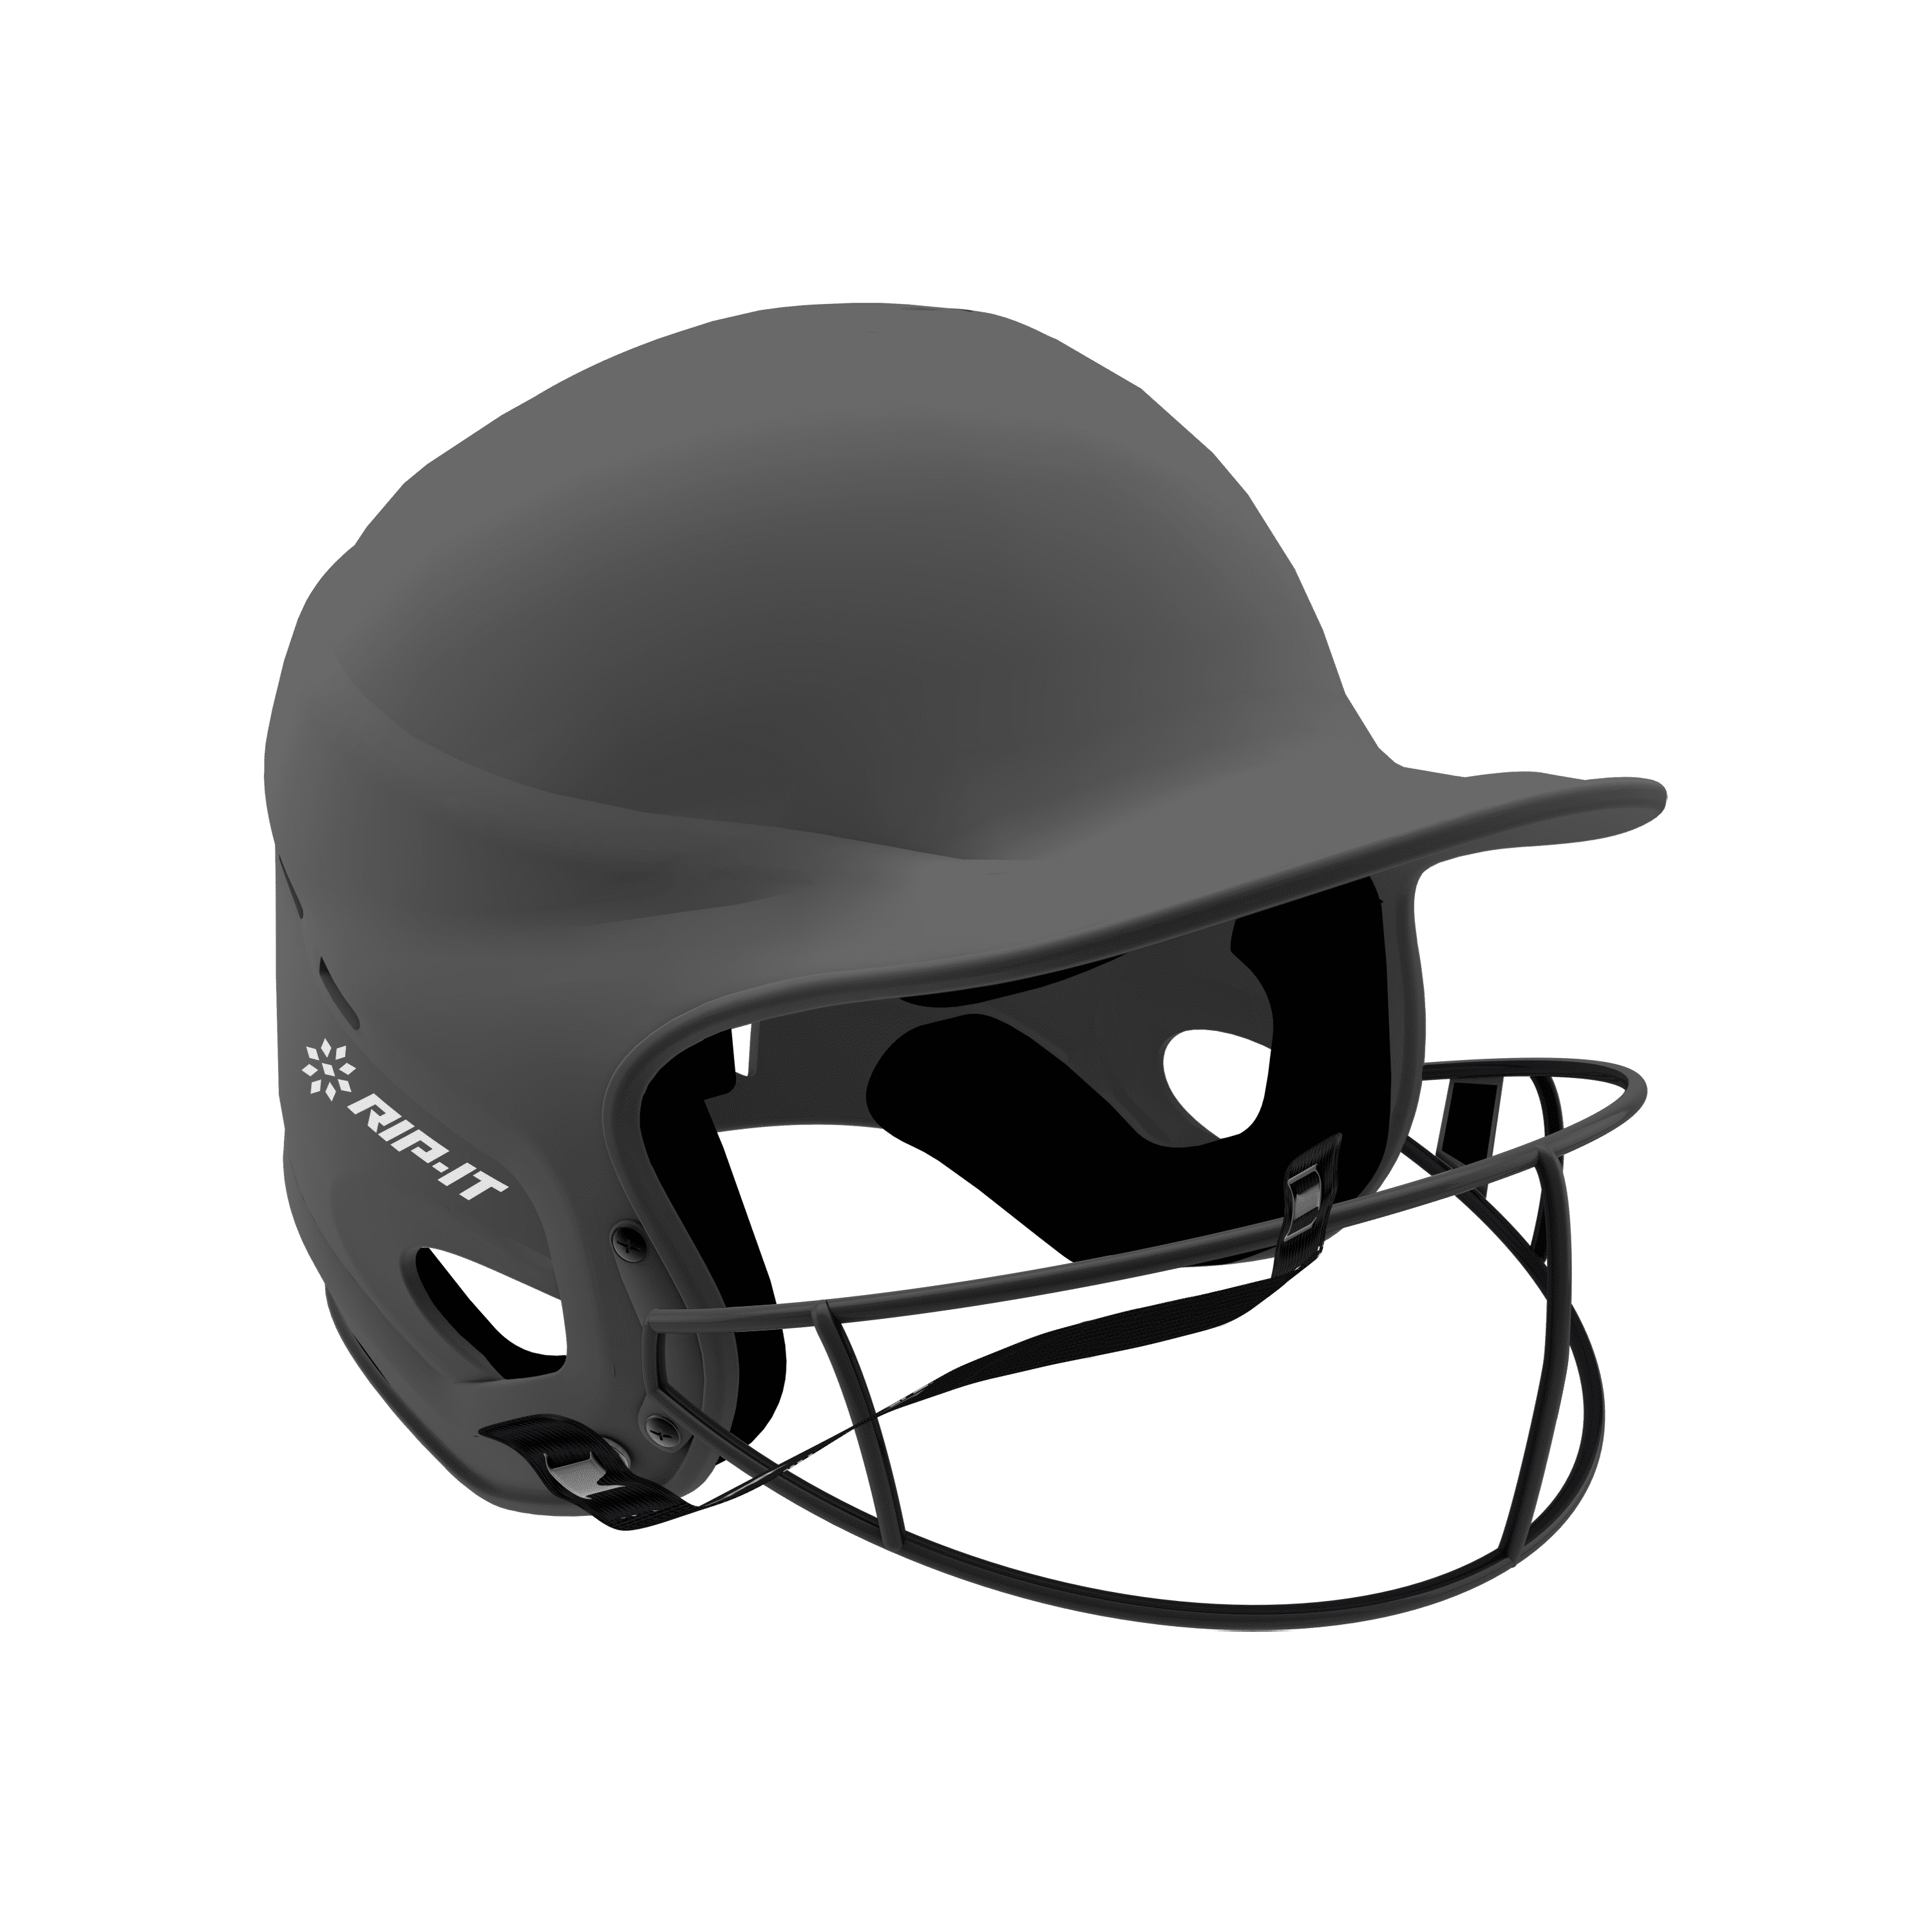 ripit softball helmets